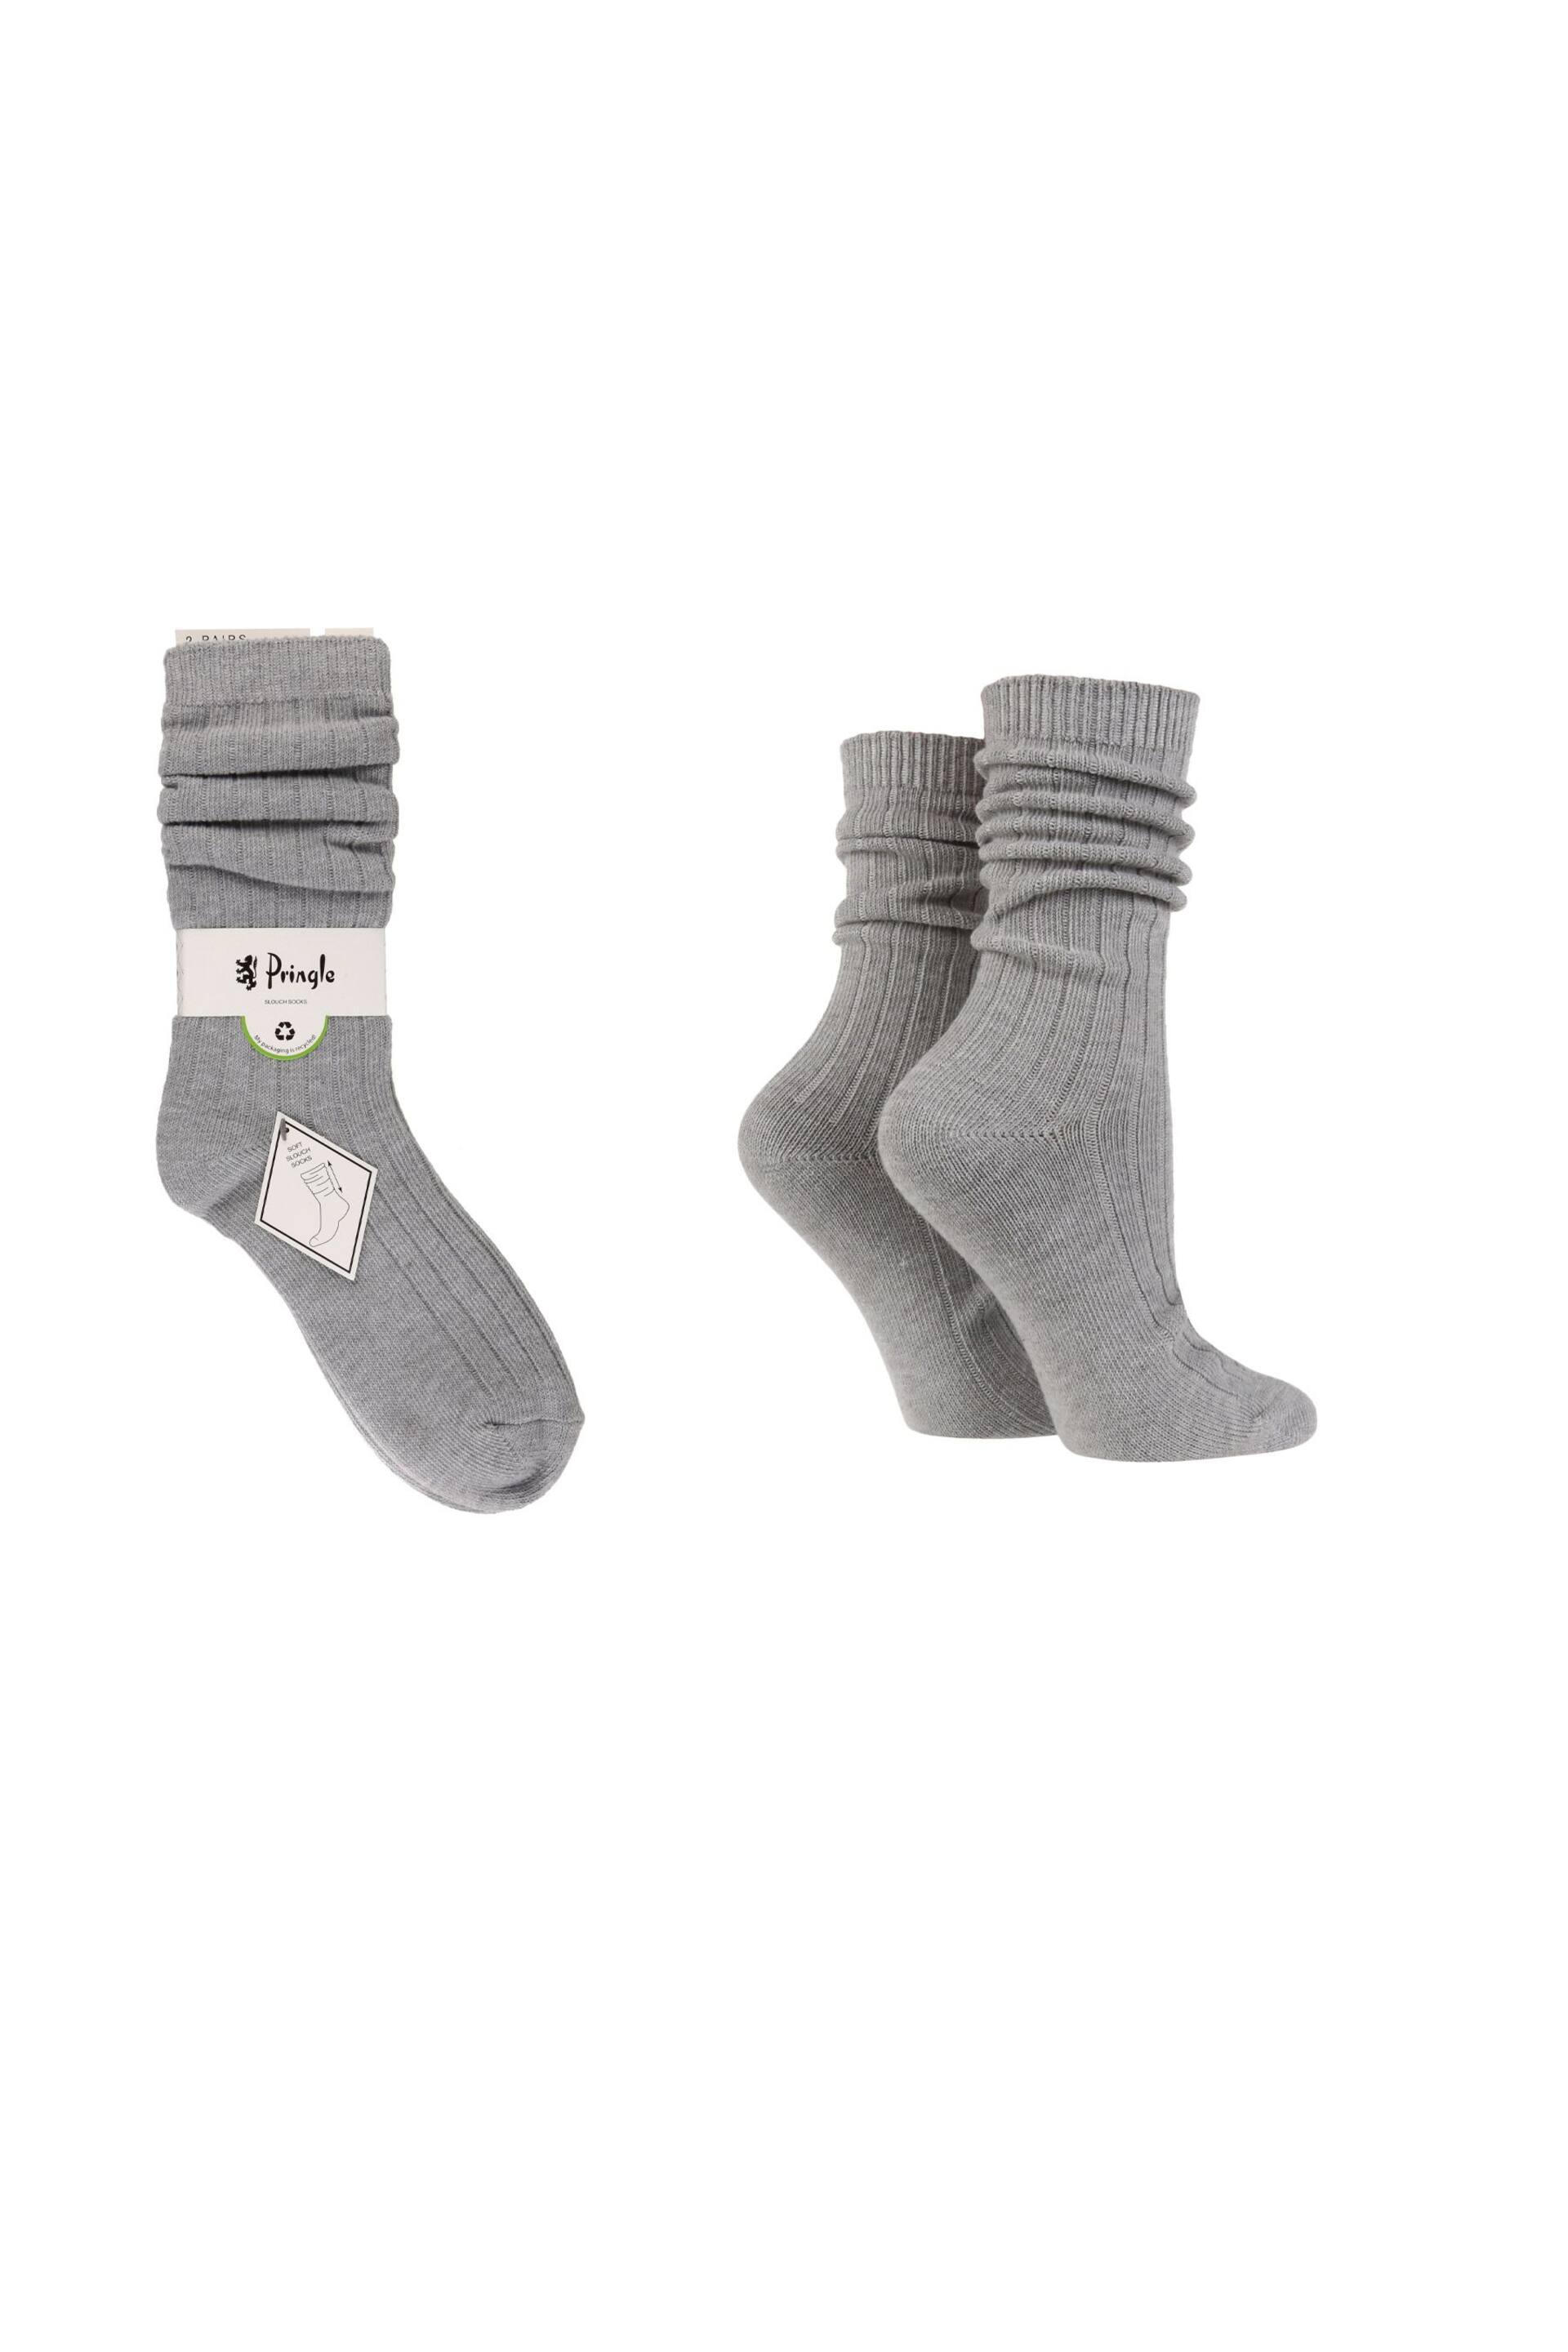 Pringle Grey Slouch Socks - Image 1 of 3